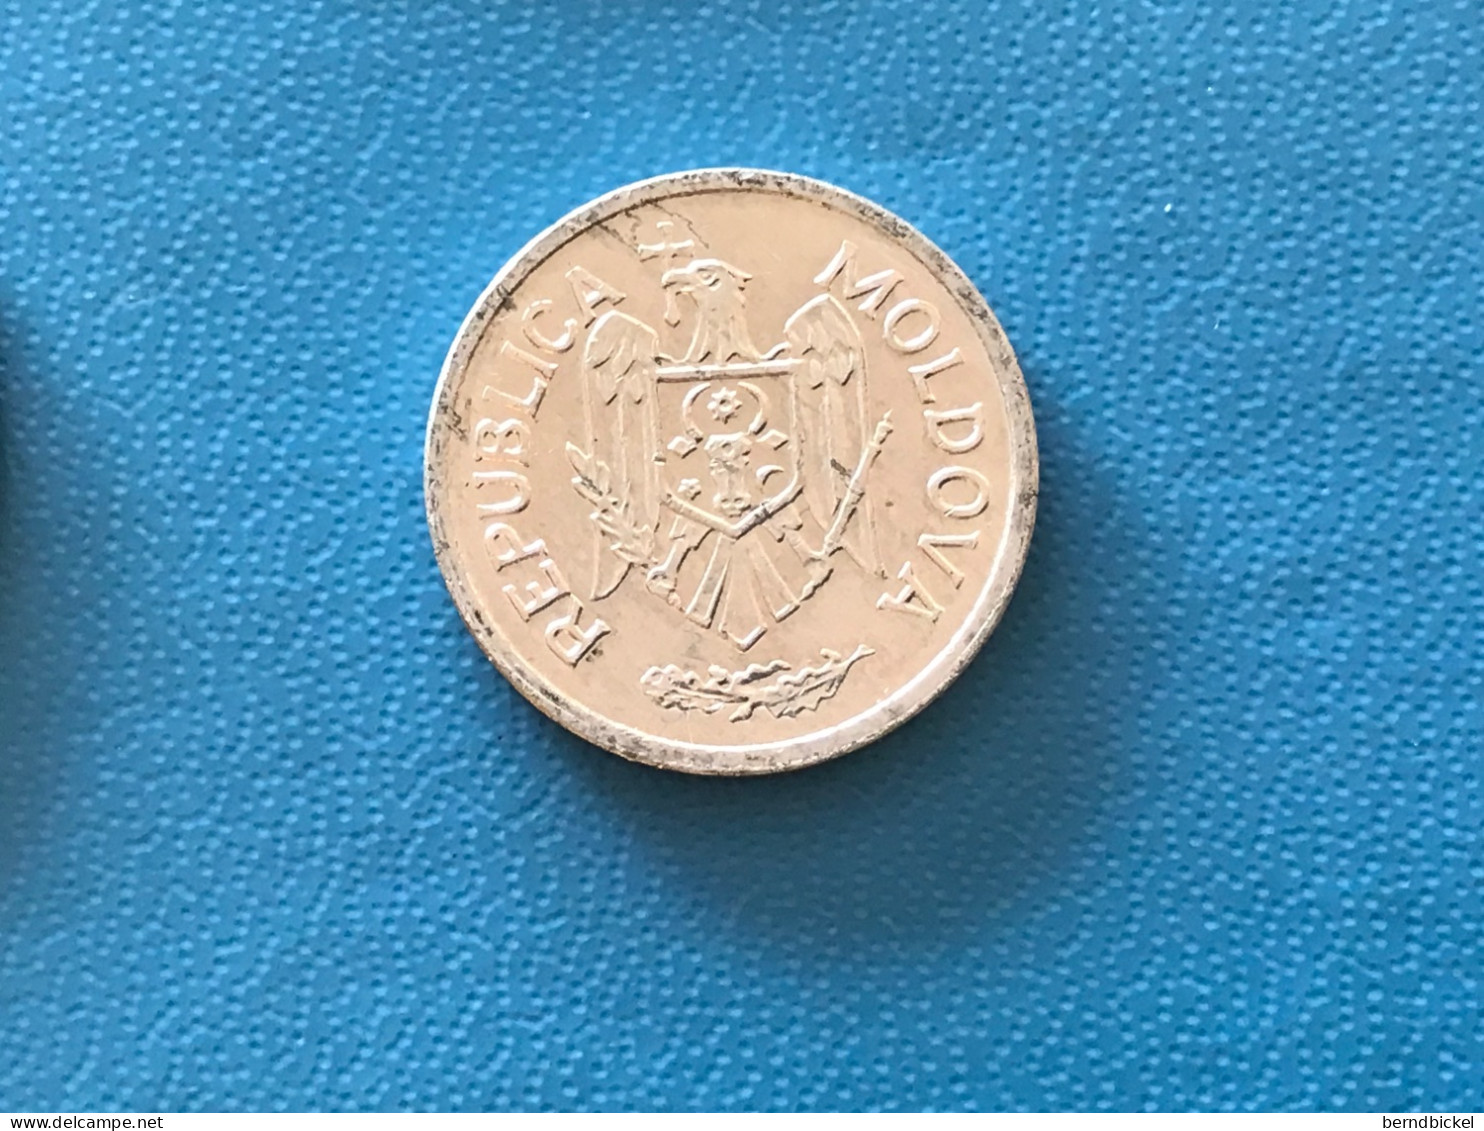 Münze Münzen Umlaufmünze Moldawien 25 Bani 2017 - Moldavia